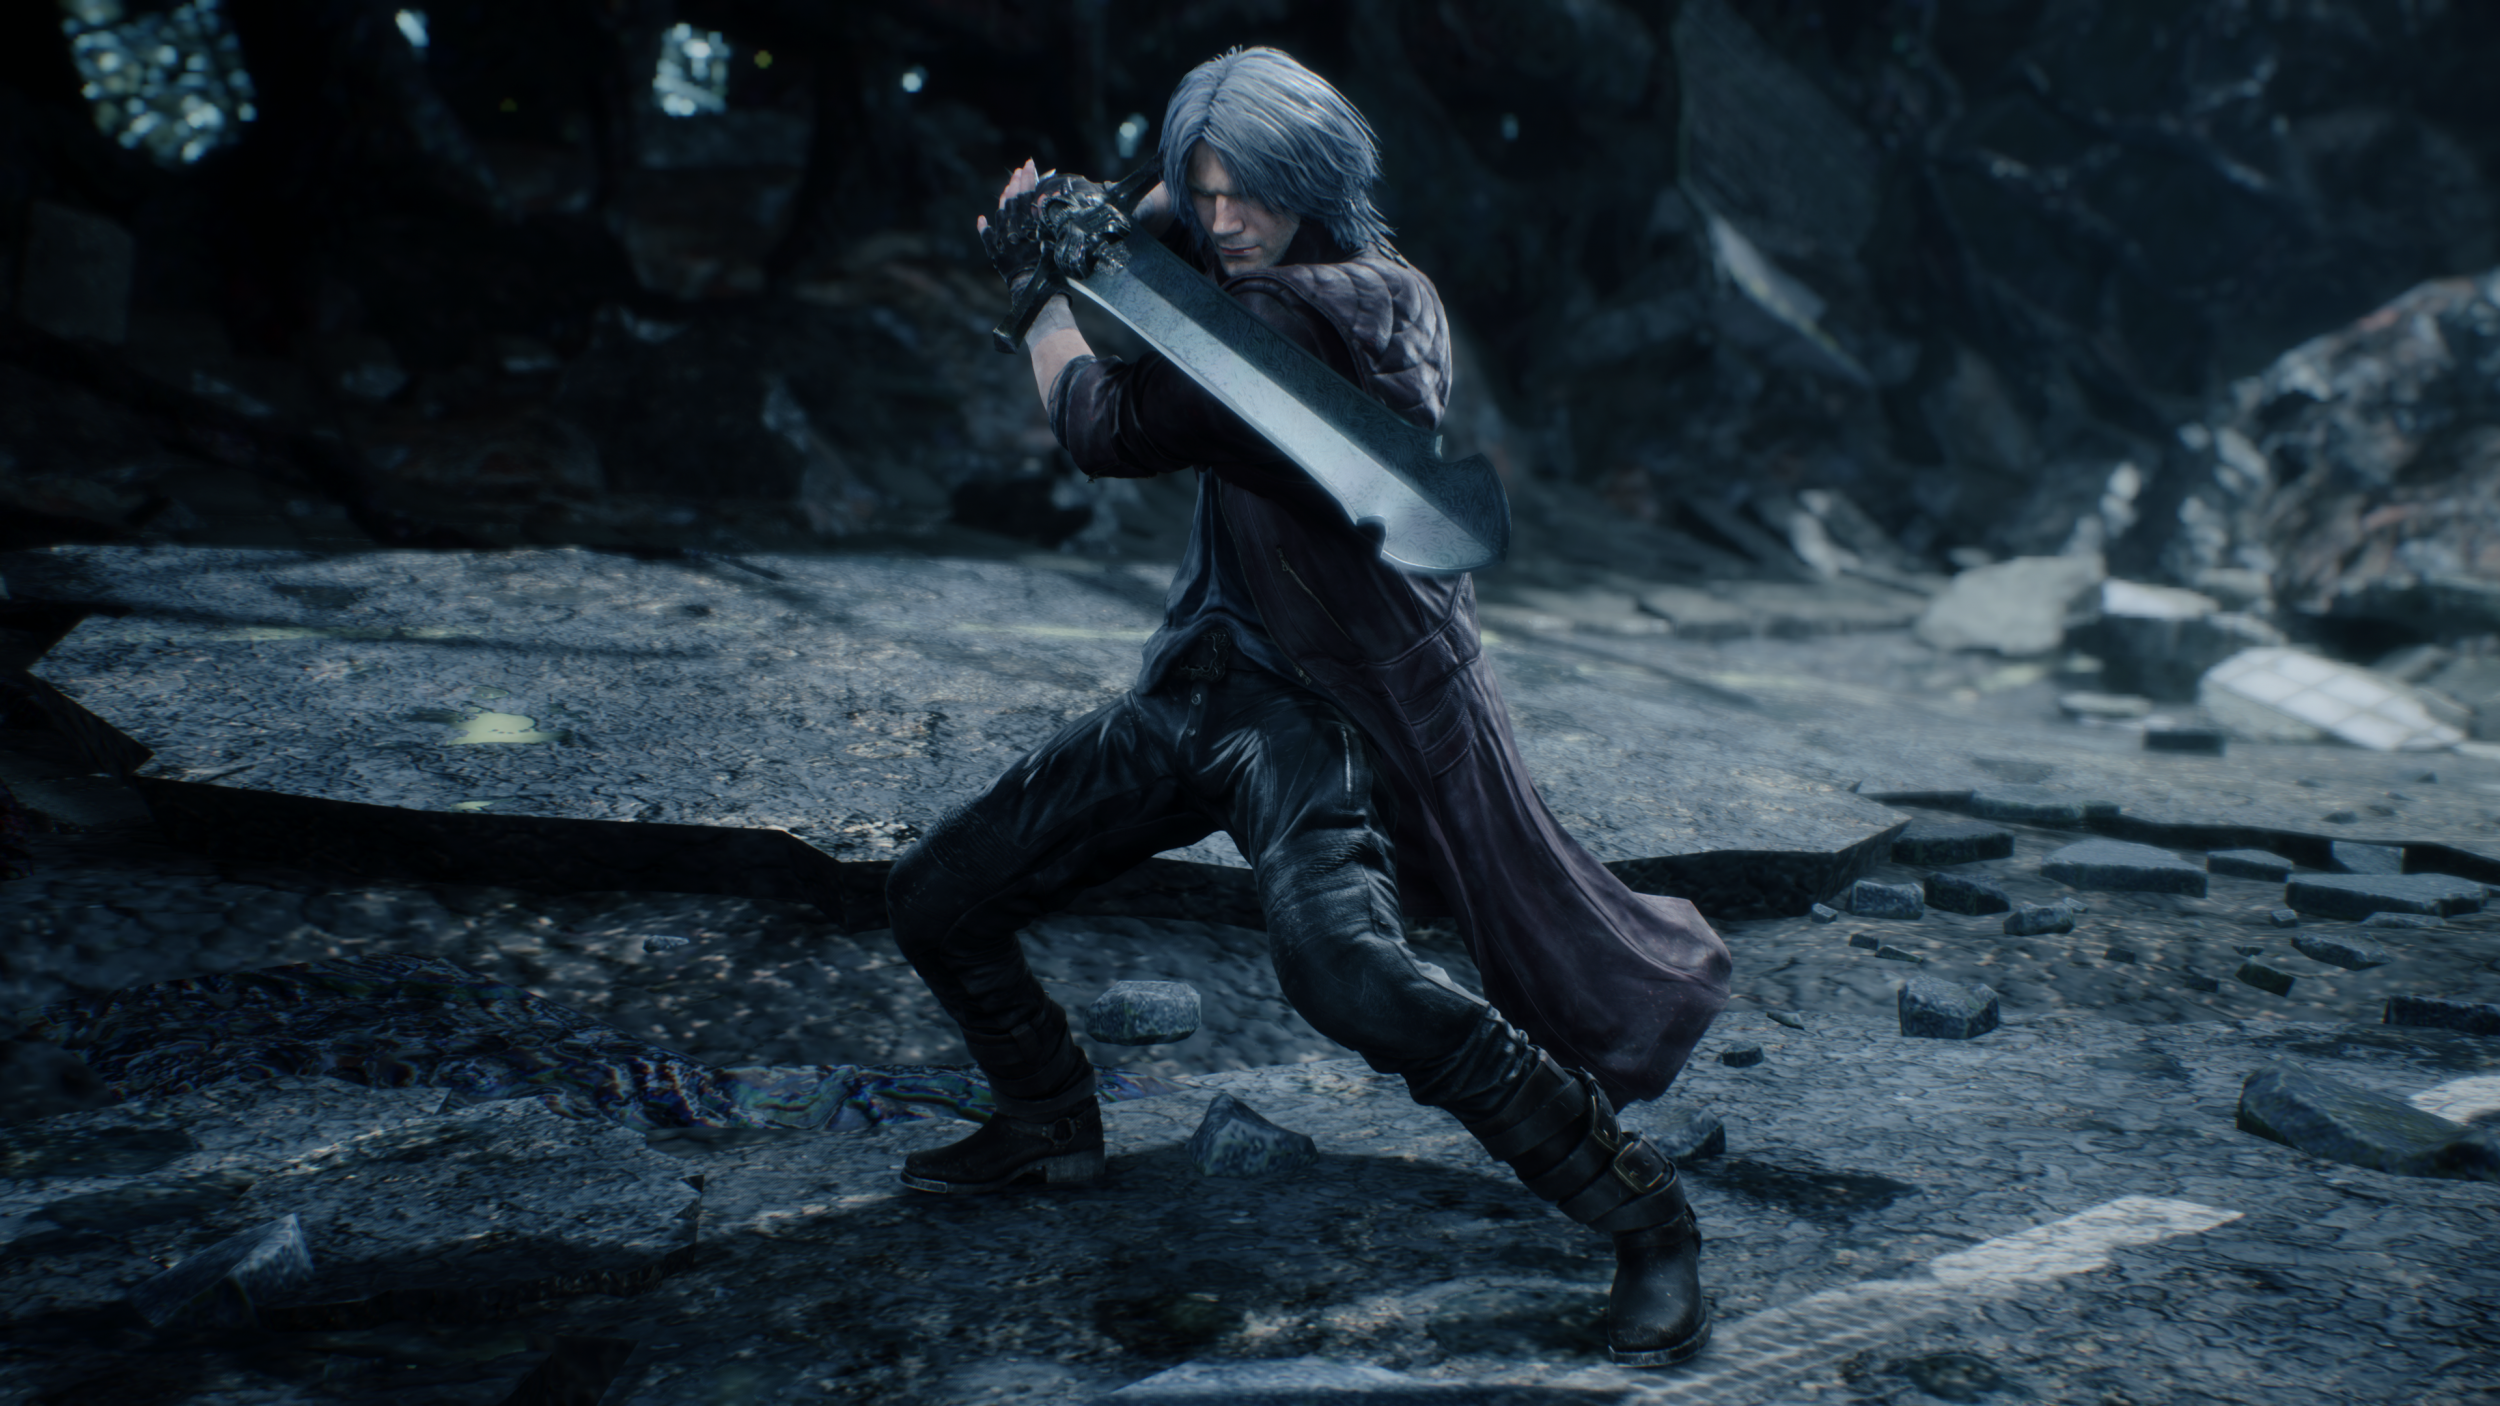 Devil hunter Dante wielding his trademark sword, Rebellion